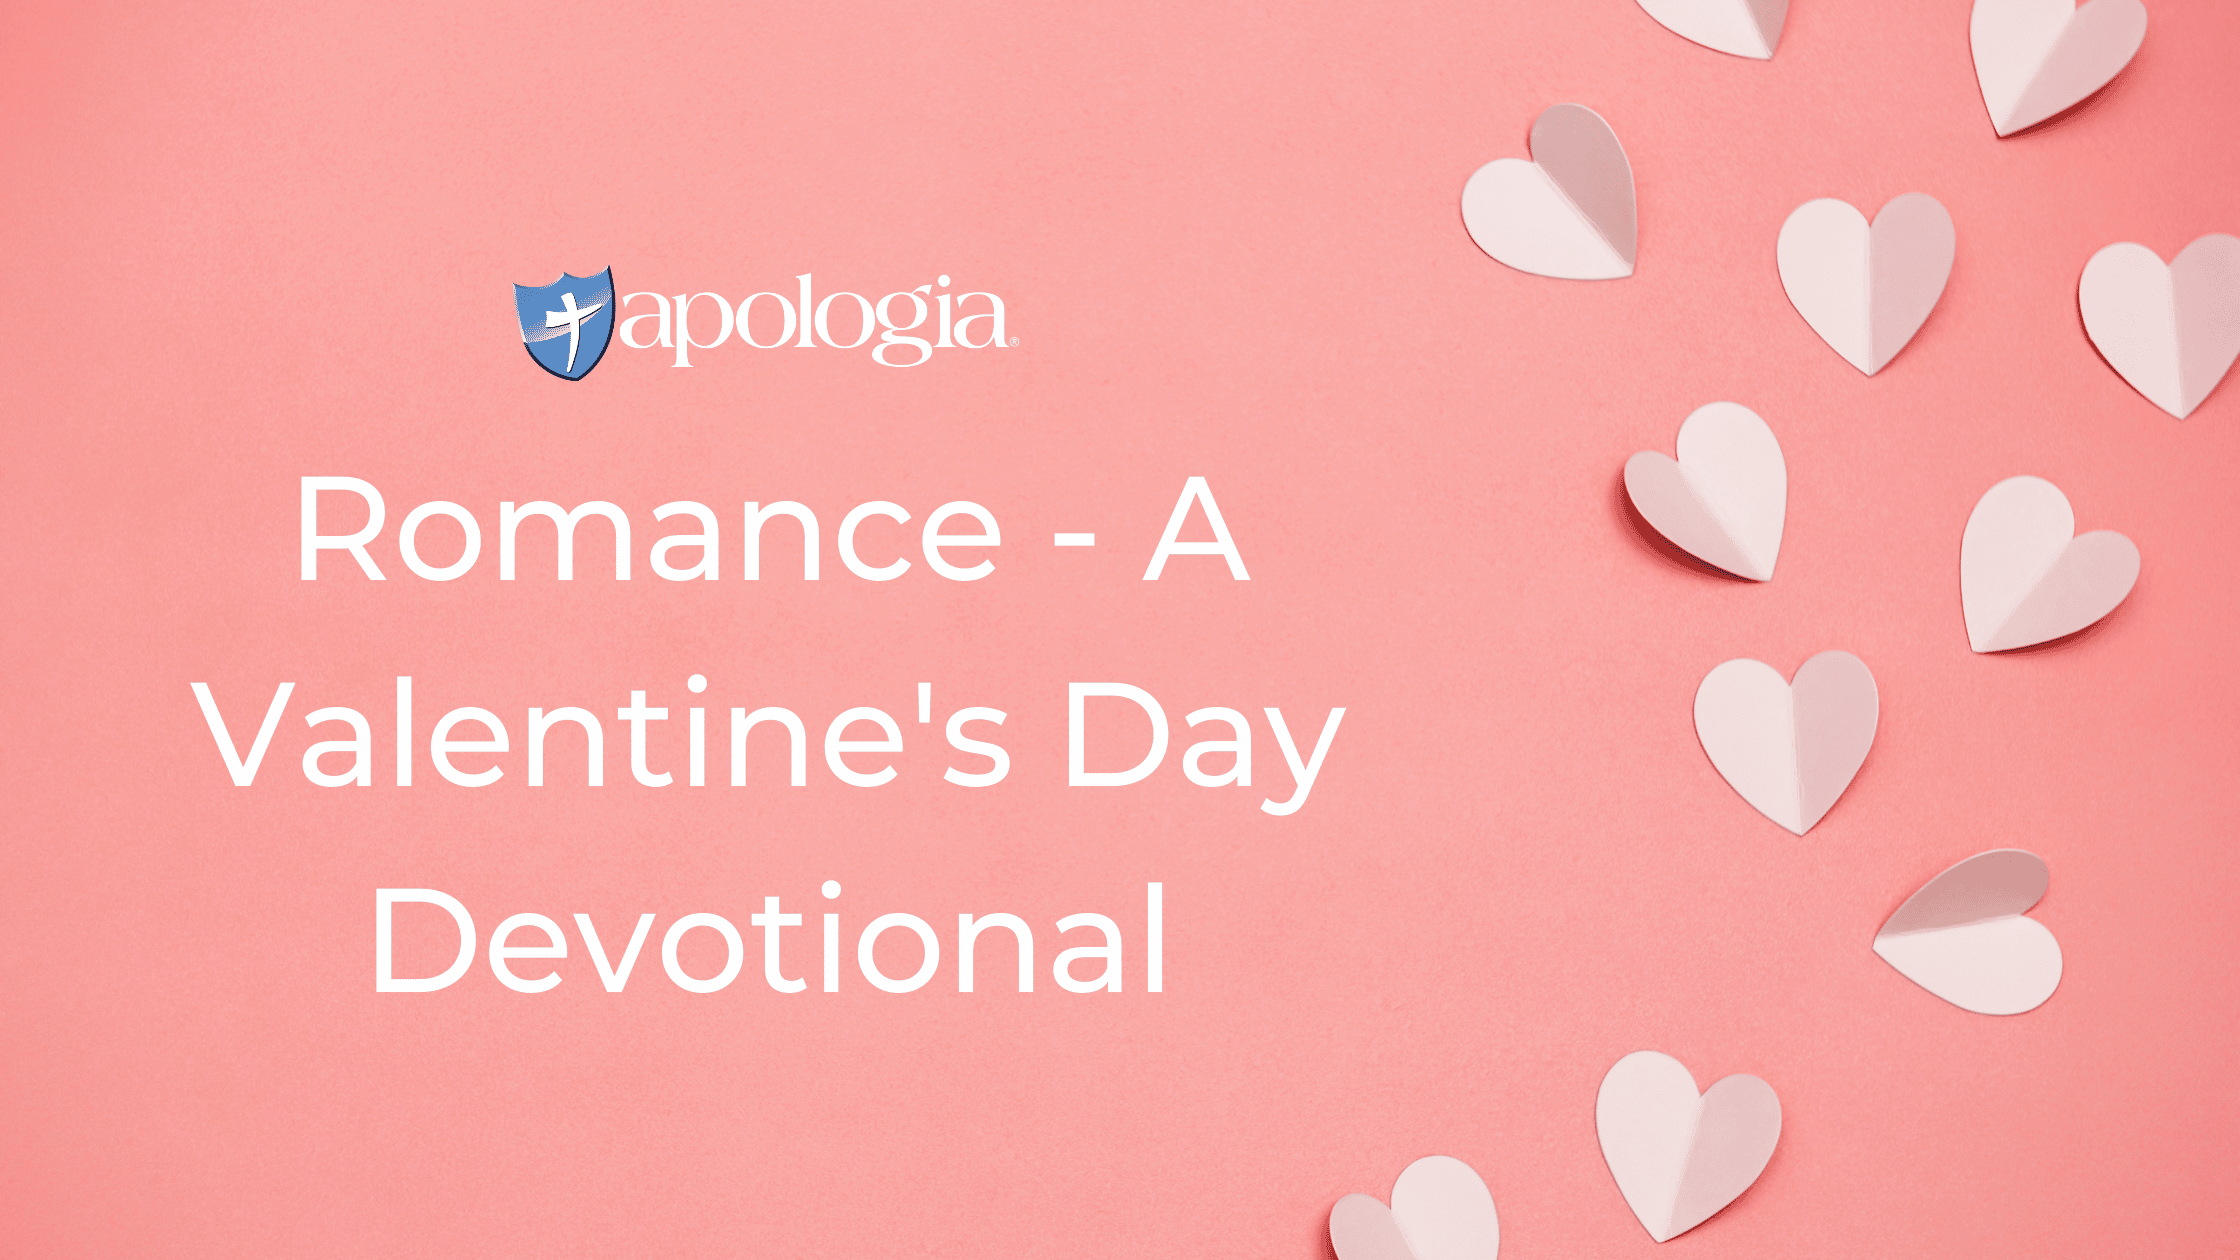 Romance - A Valentine's Day Devotional